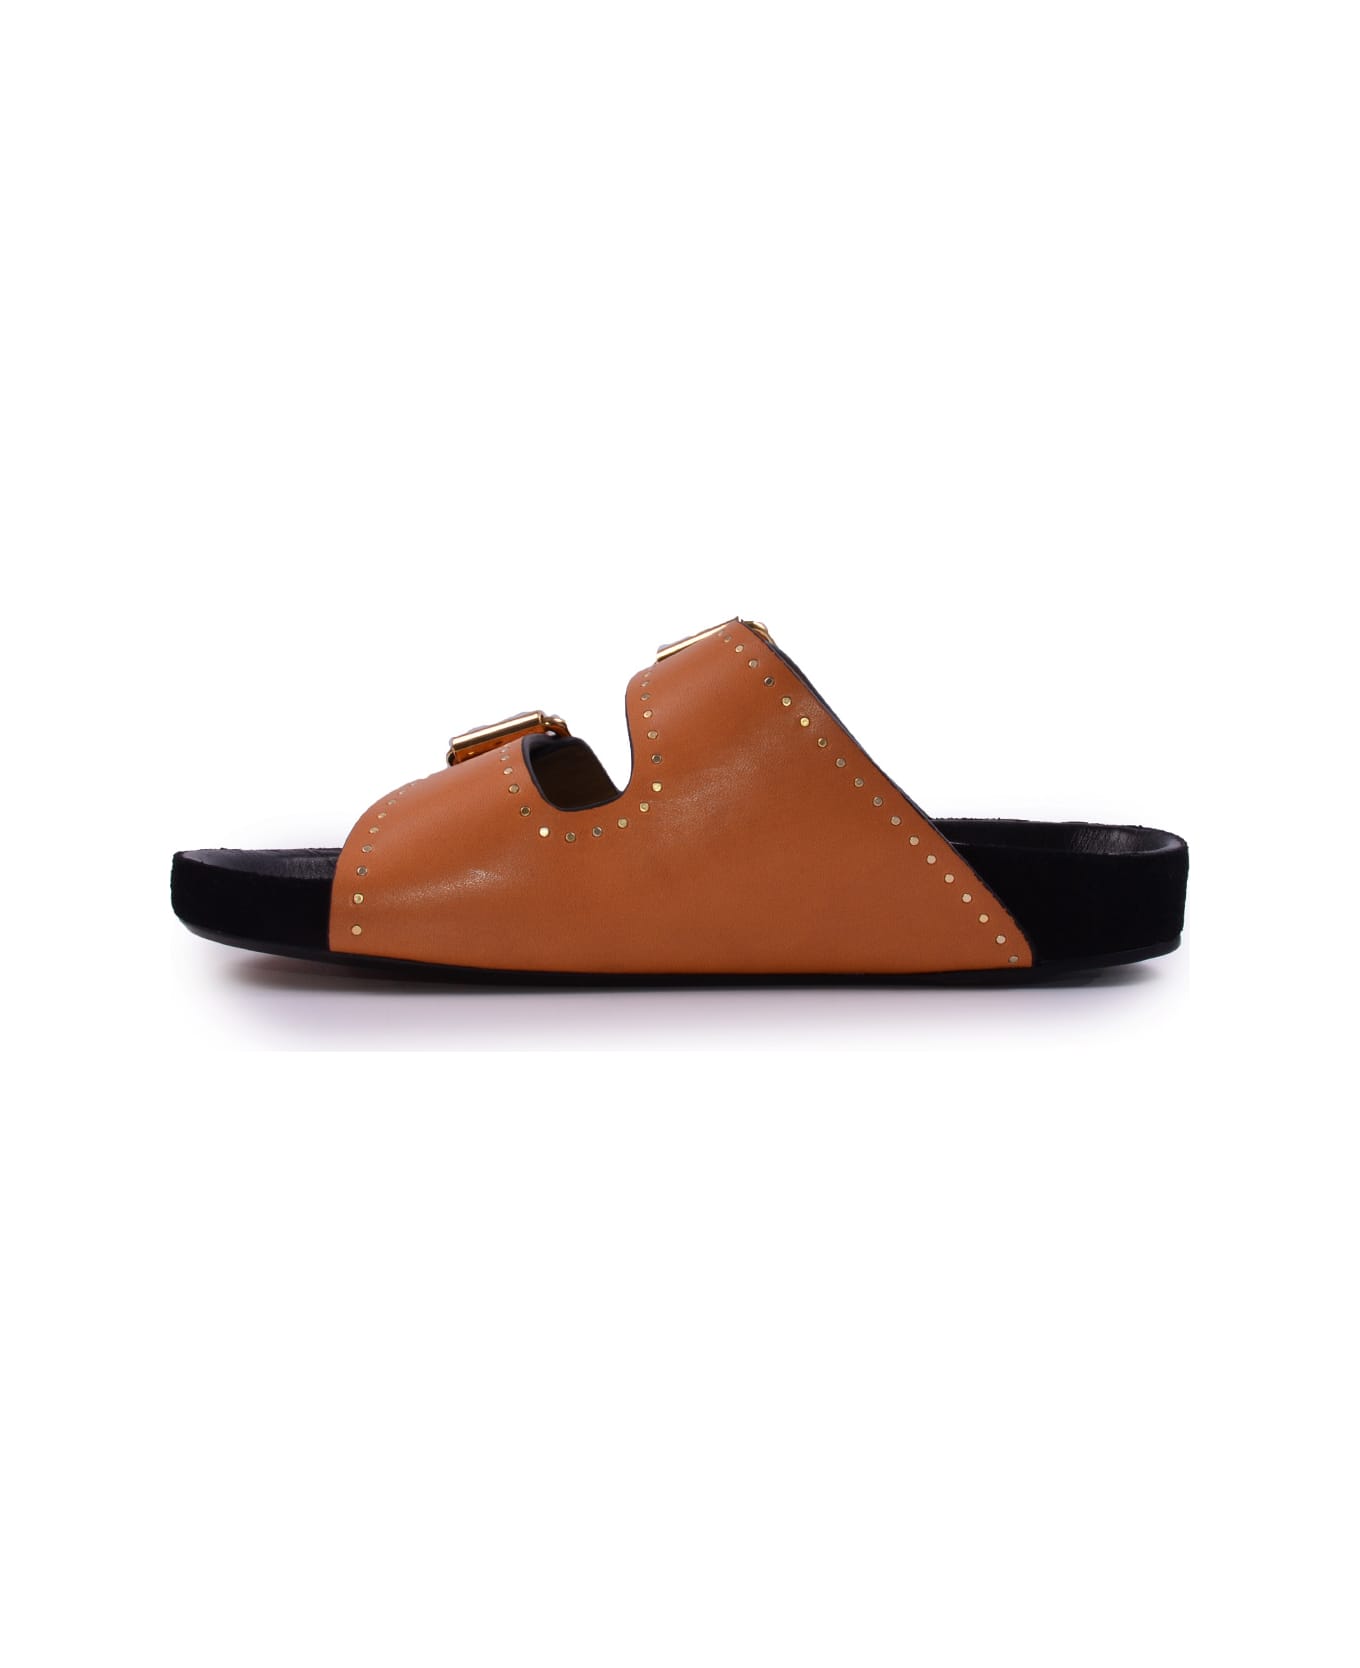 Isabel Marant Leather Sandals - Natural サンダル